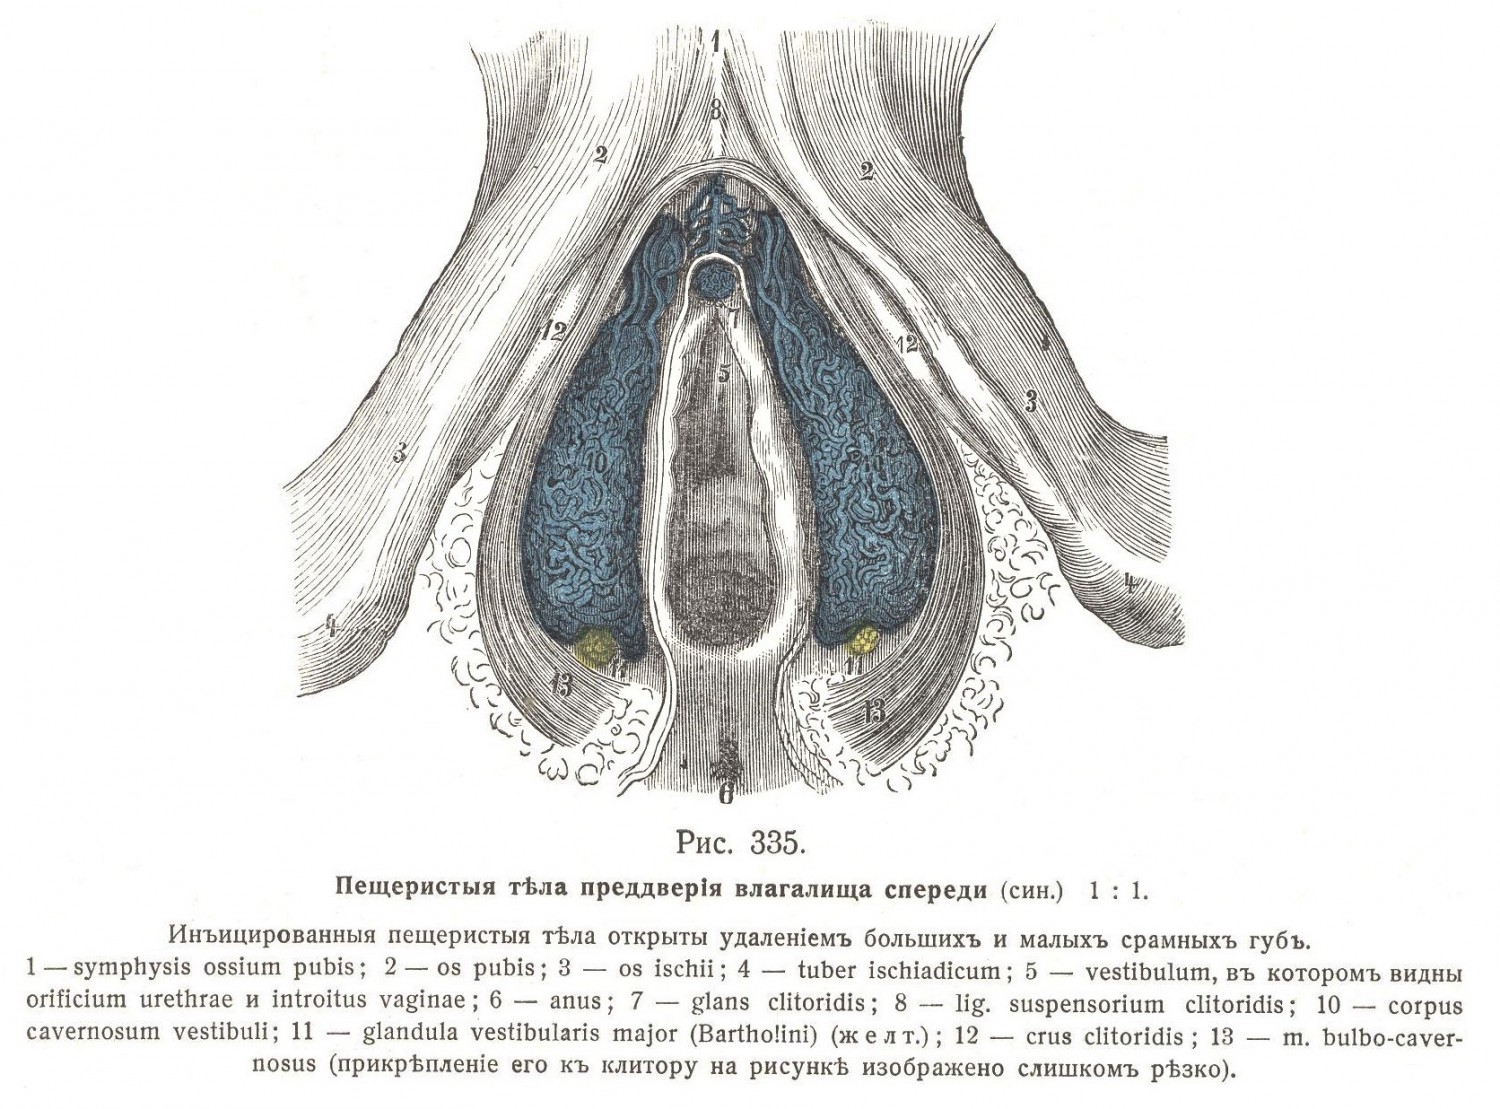 Бартолиніева железа, glandula vestibularis major (Bartholini)